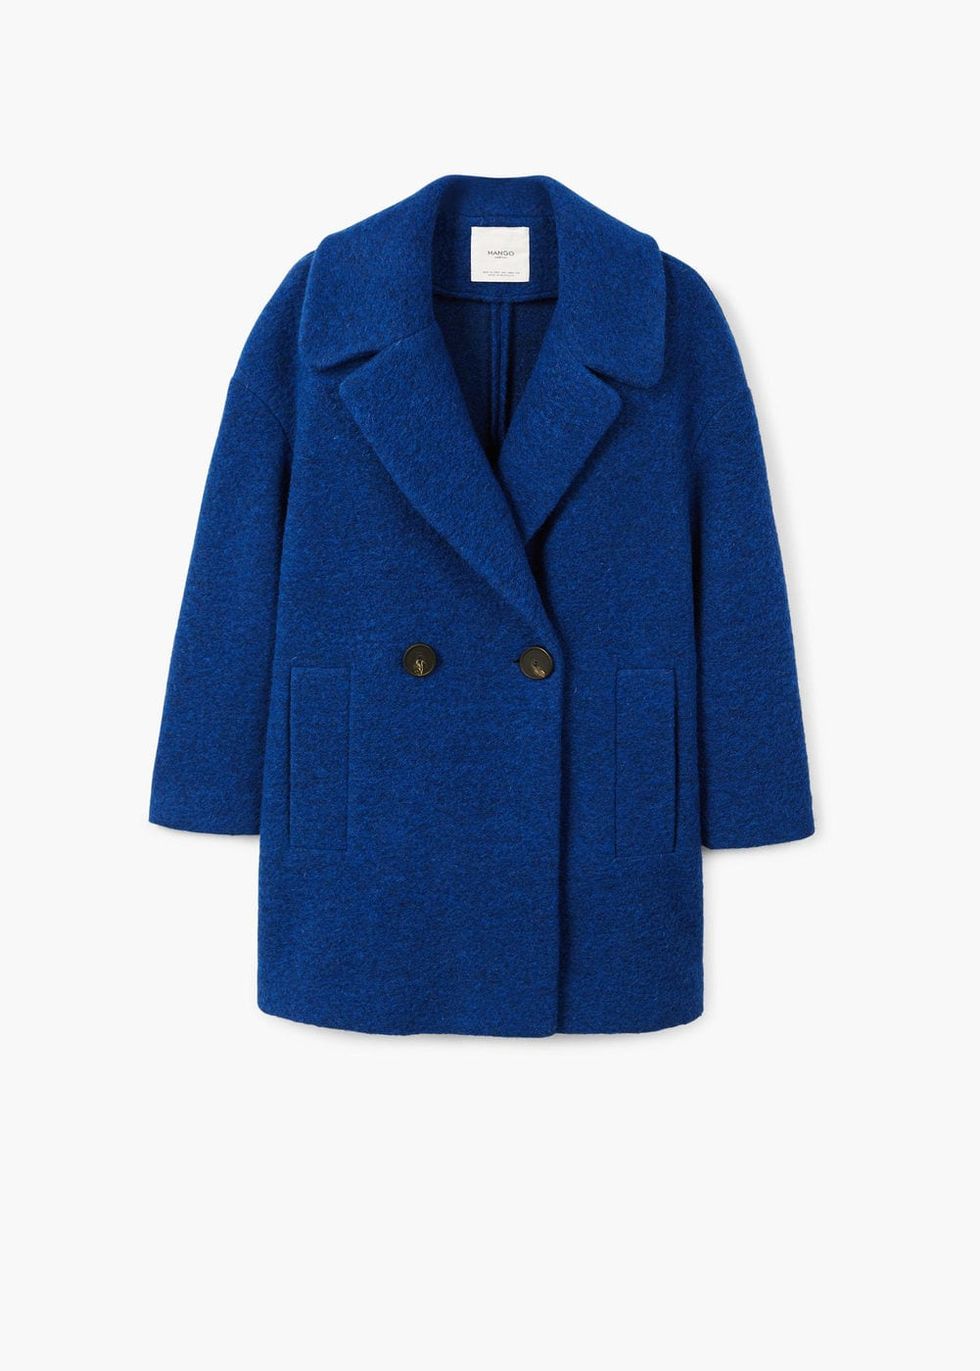 Clothing, Cobalt blue, Blue, Outerwear, Electric blue, Sleeve, Jacket, Coat, Collar, Button, 